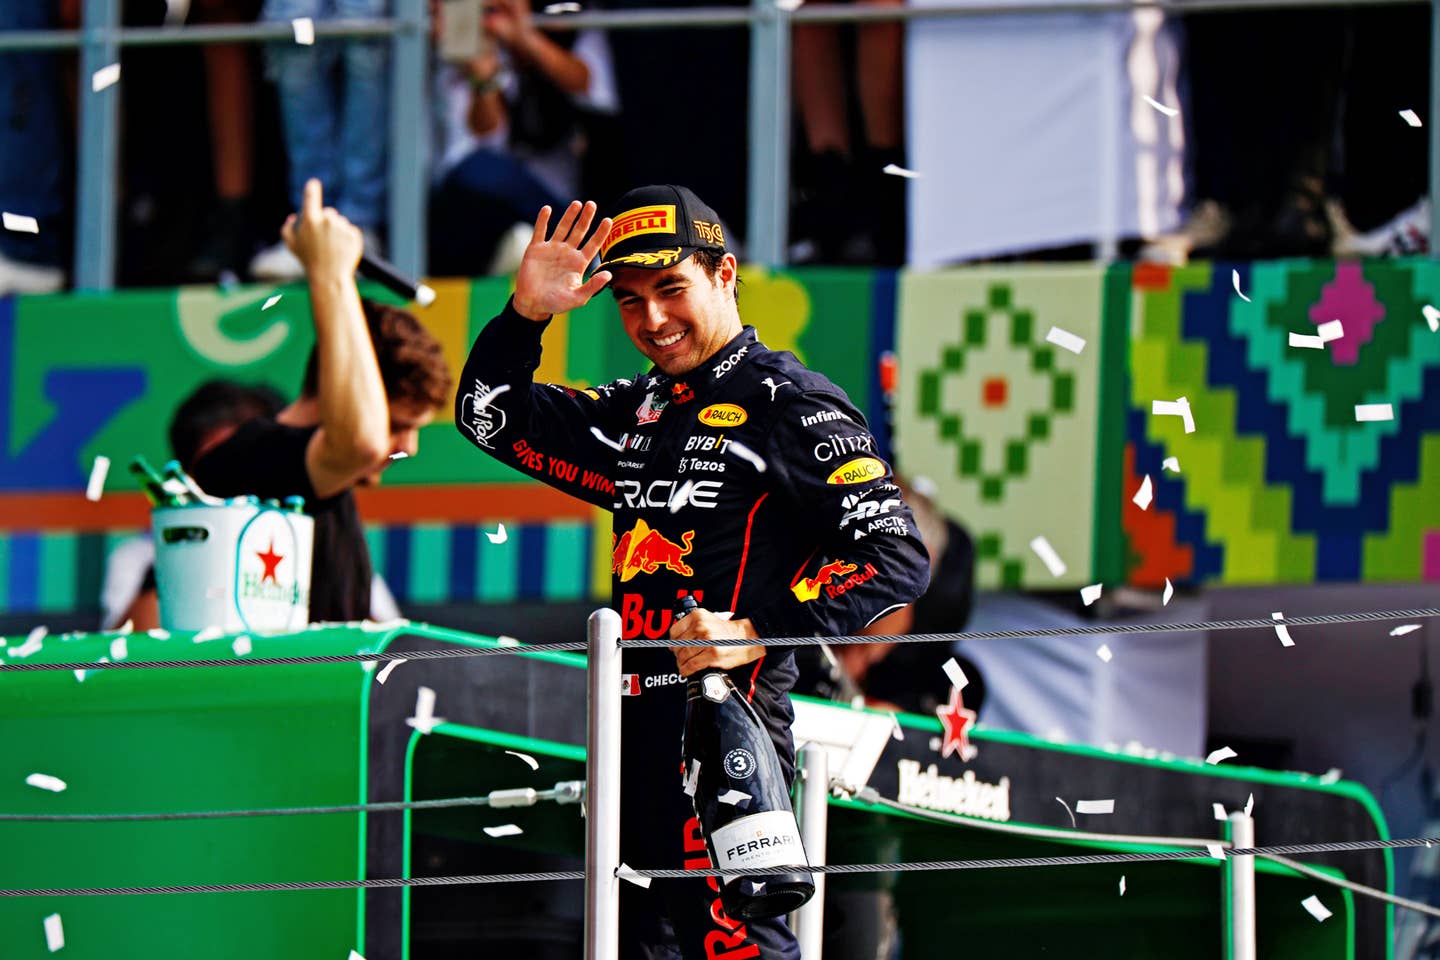 Sergio Perez celebrates a podium finish in Mexico | Photo by Clive Mason - Formula 1/Formula 1 via Getty Images